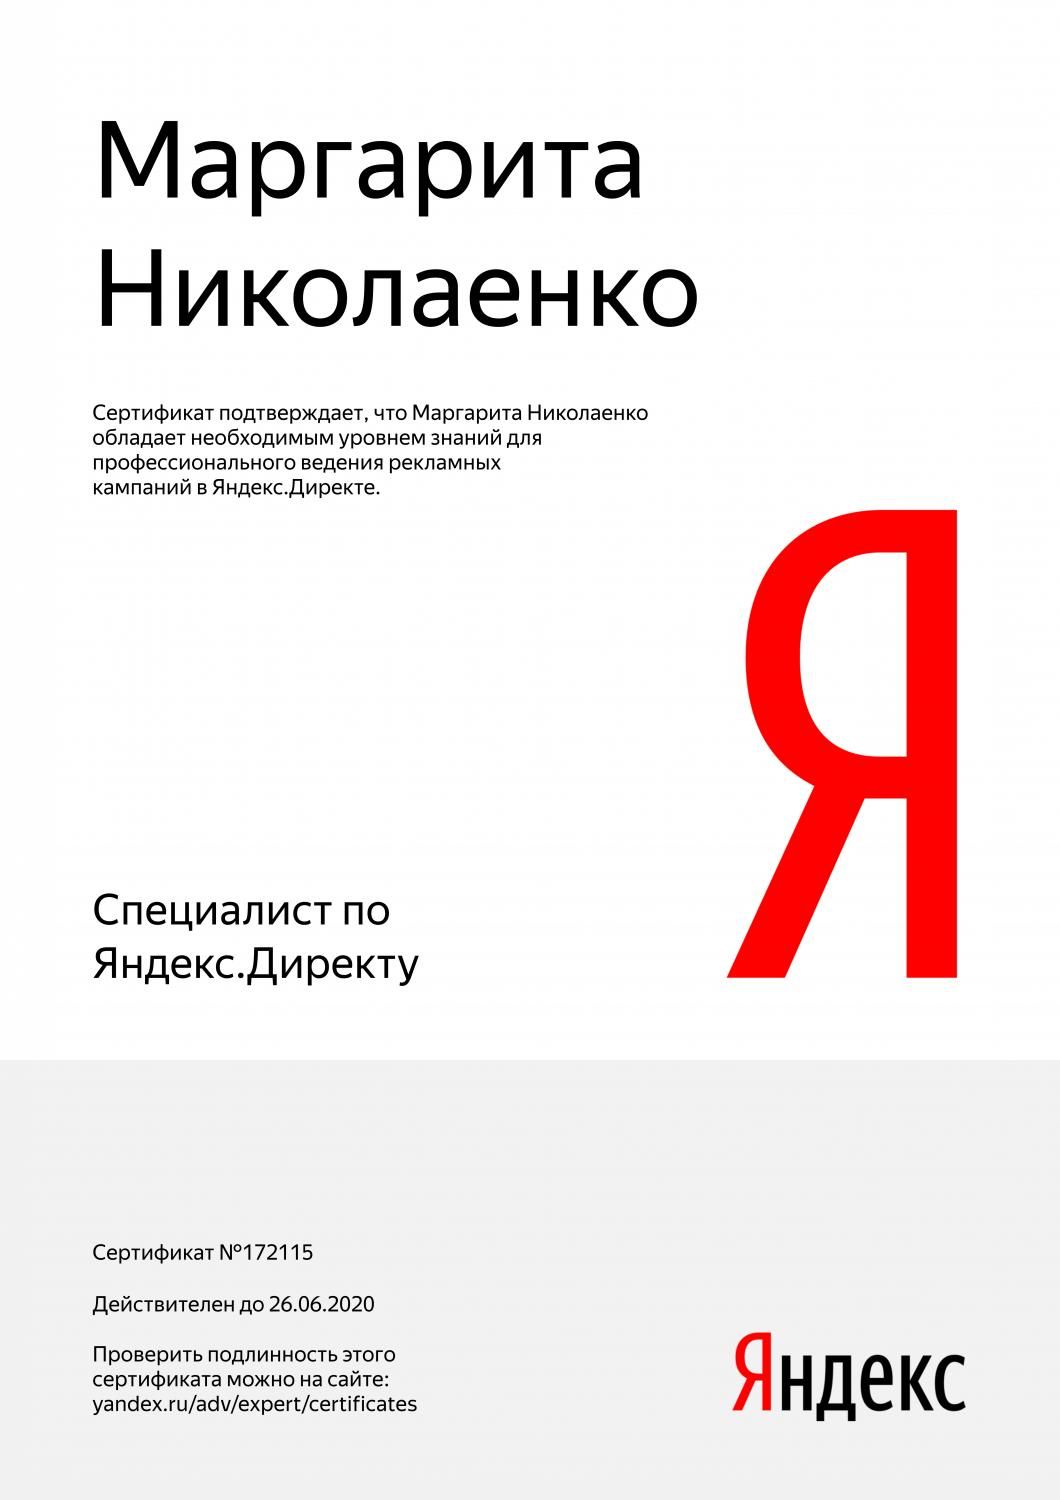 Сертификат специалиста Яндекс. Директ - Николаенко М. в Санкт-Петербурга